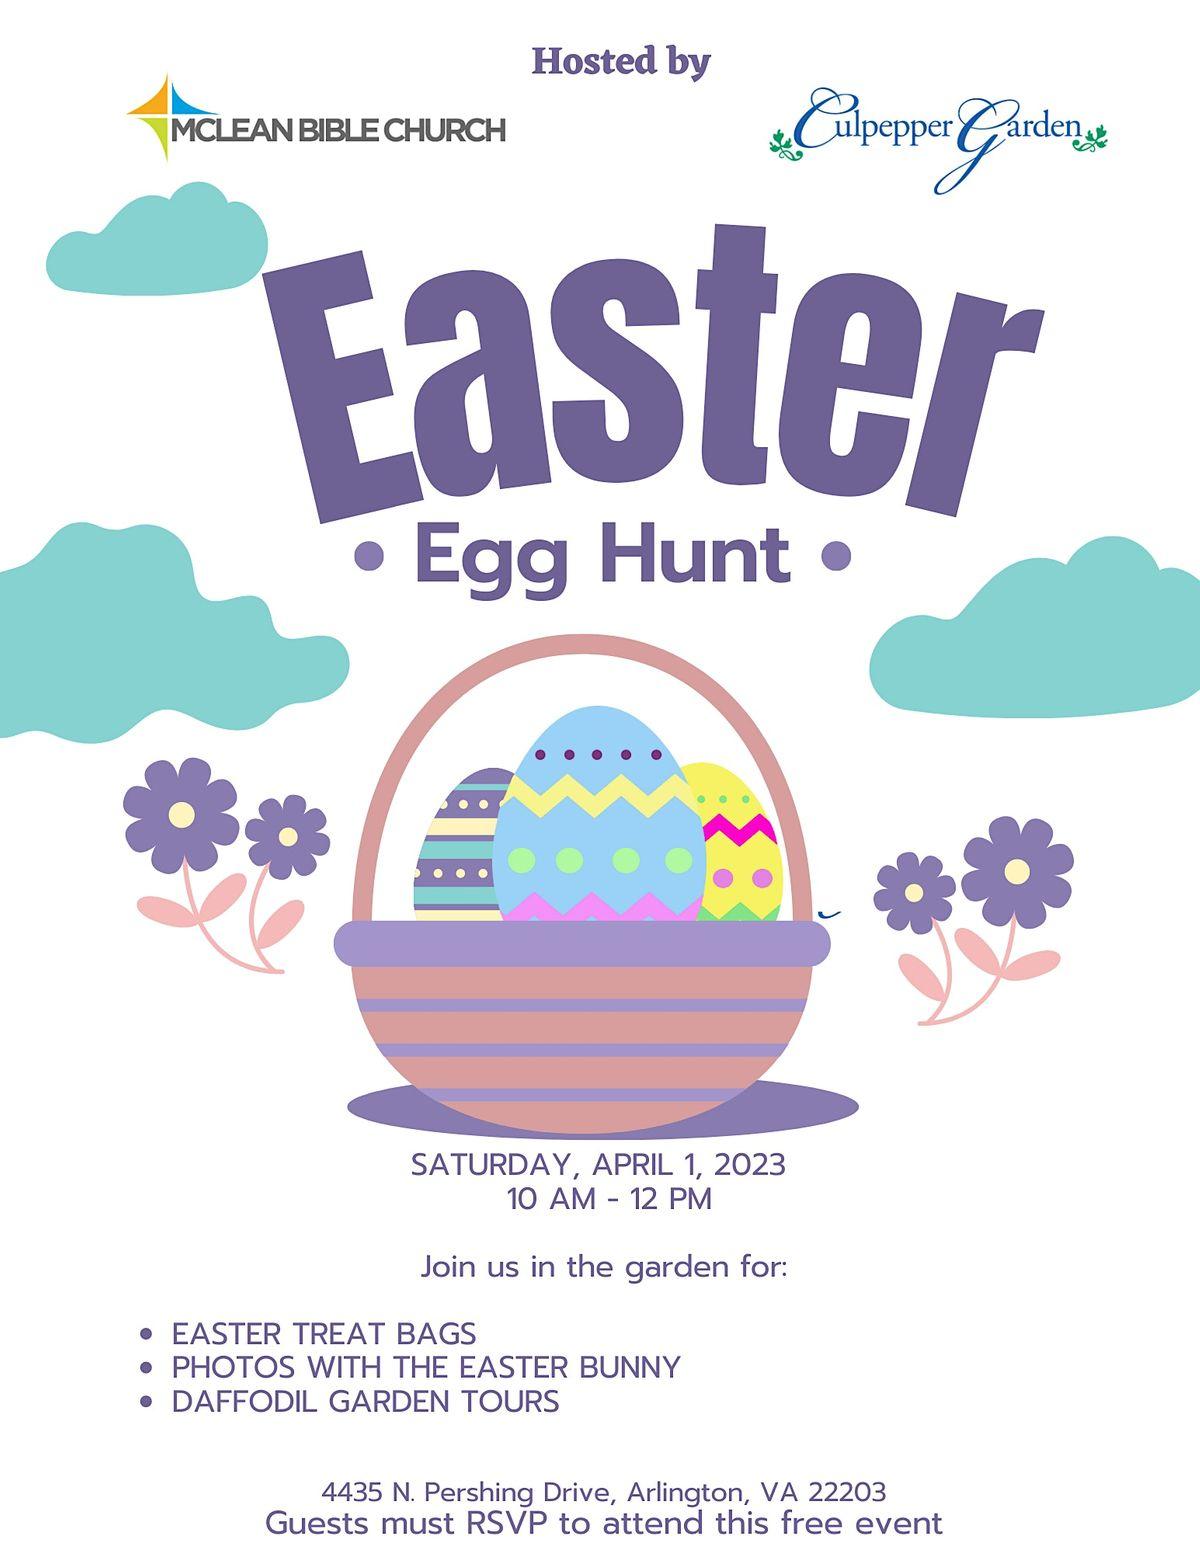 Easter Egg Hunt at Culpepper Garden